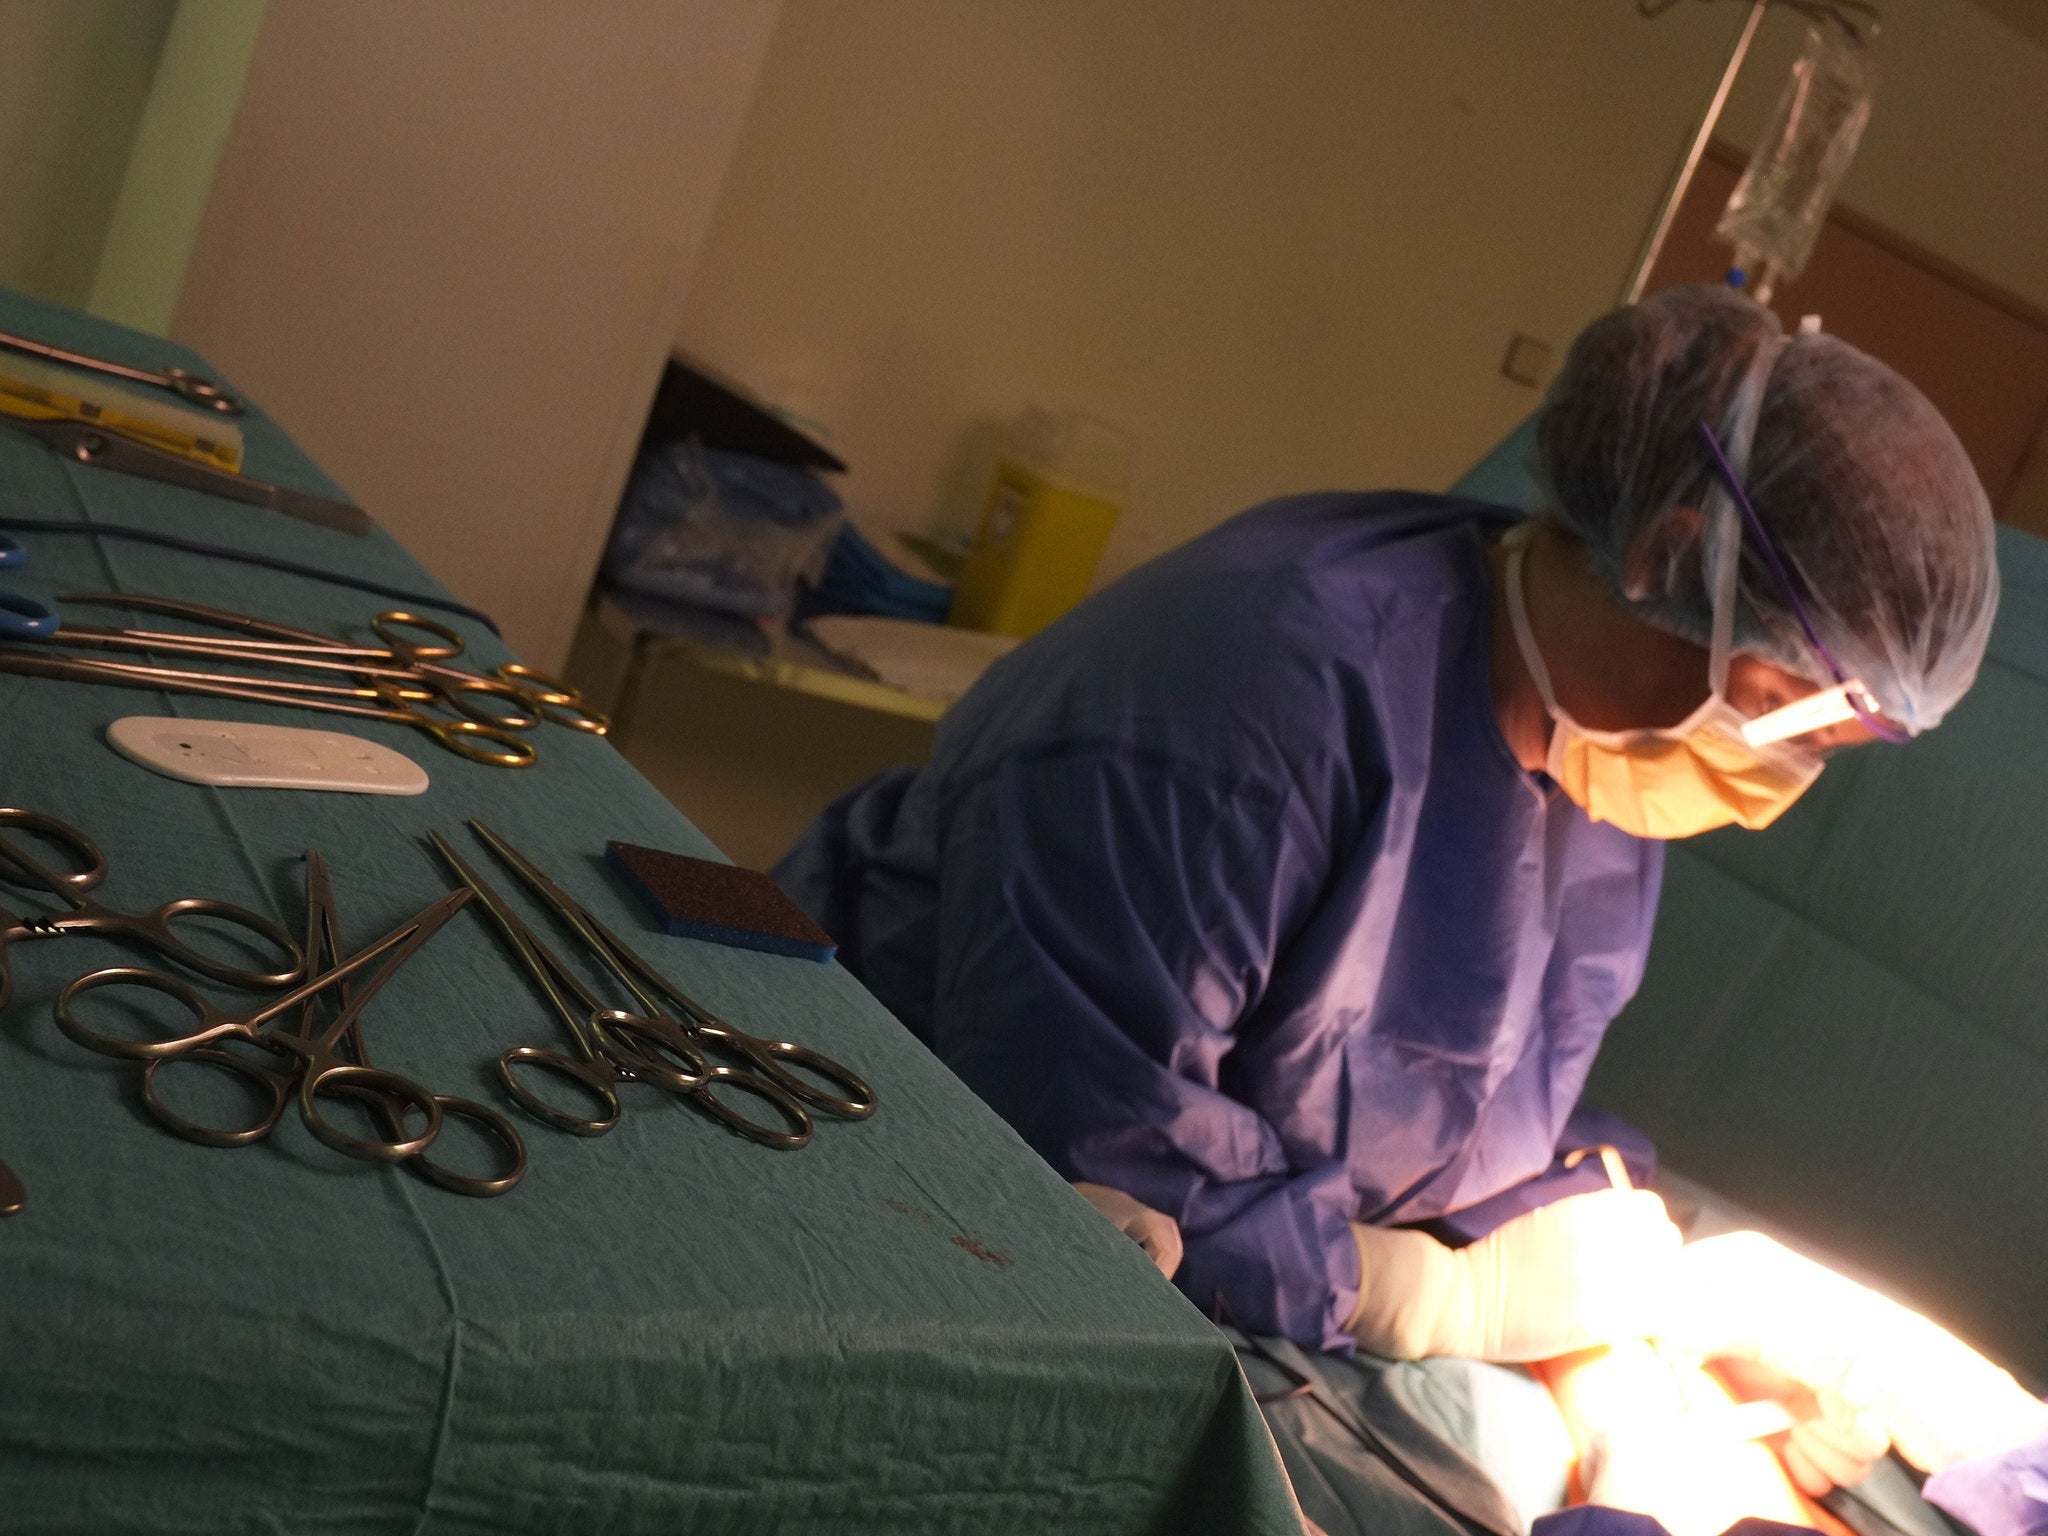 A patient undergoing surgery